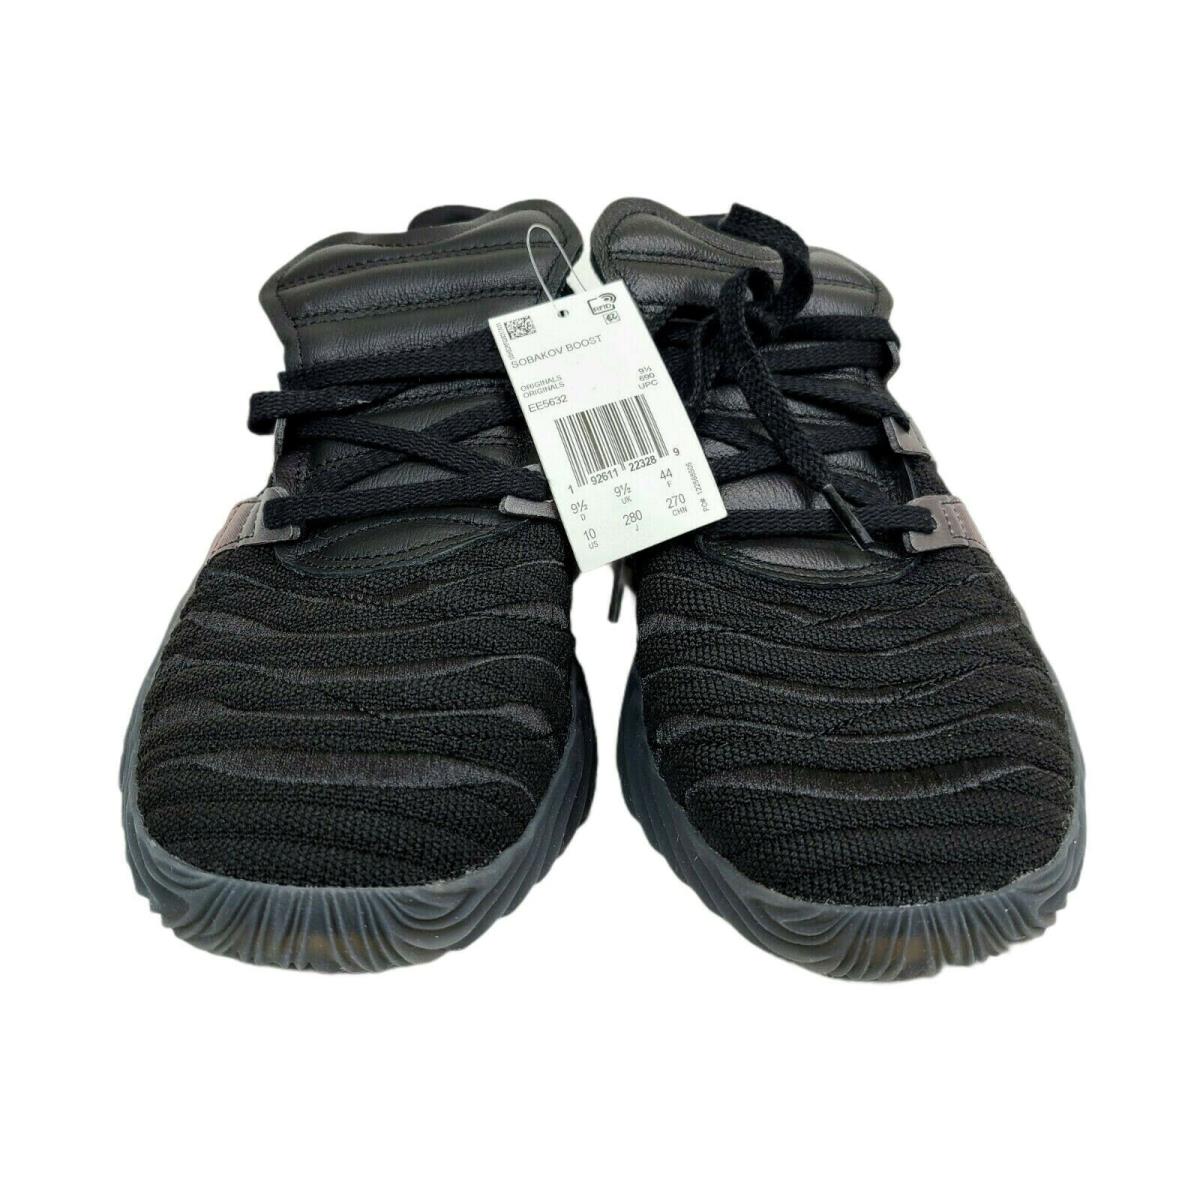 Adidas shoes Sobakov - Black, Manufacturer: core black/solar orange/core black 1